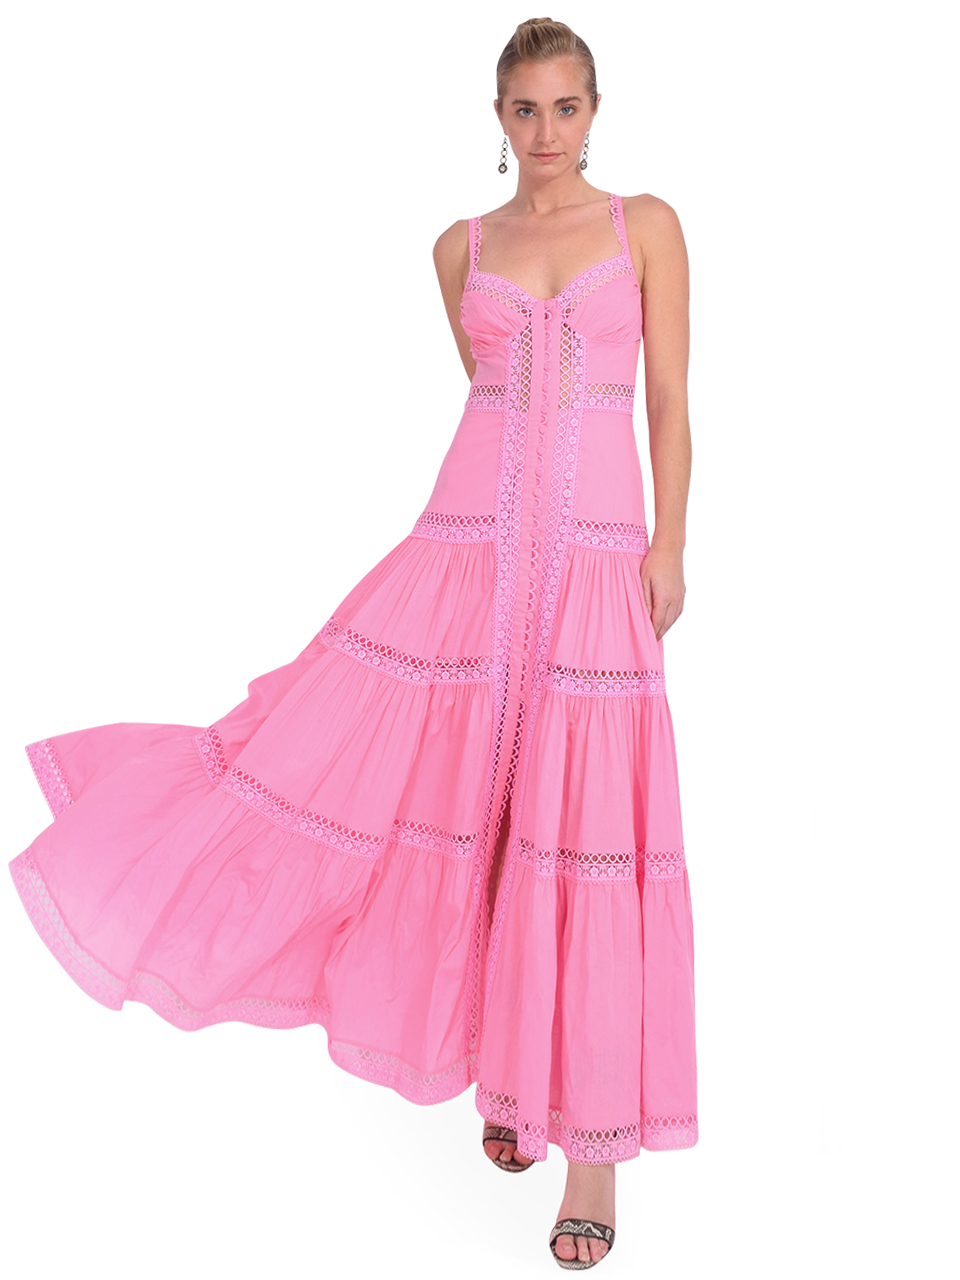 CHARO RUIZ Ardele Long Dress in Rose Quartz Front View 2